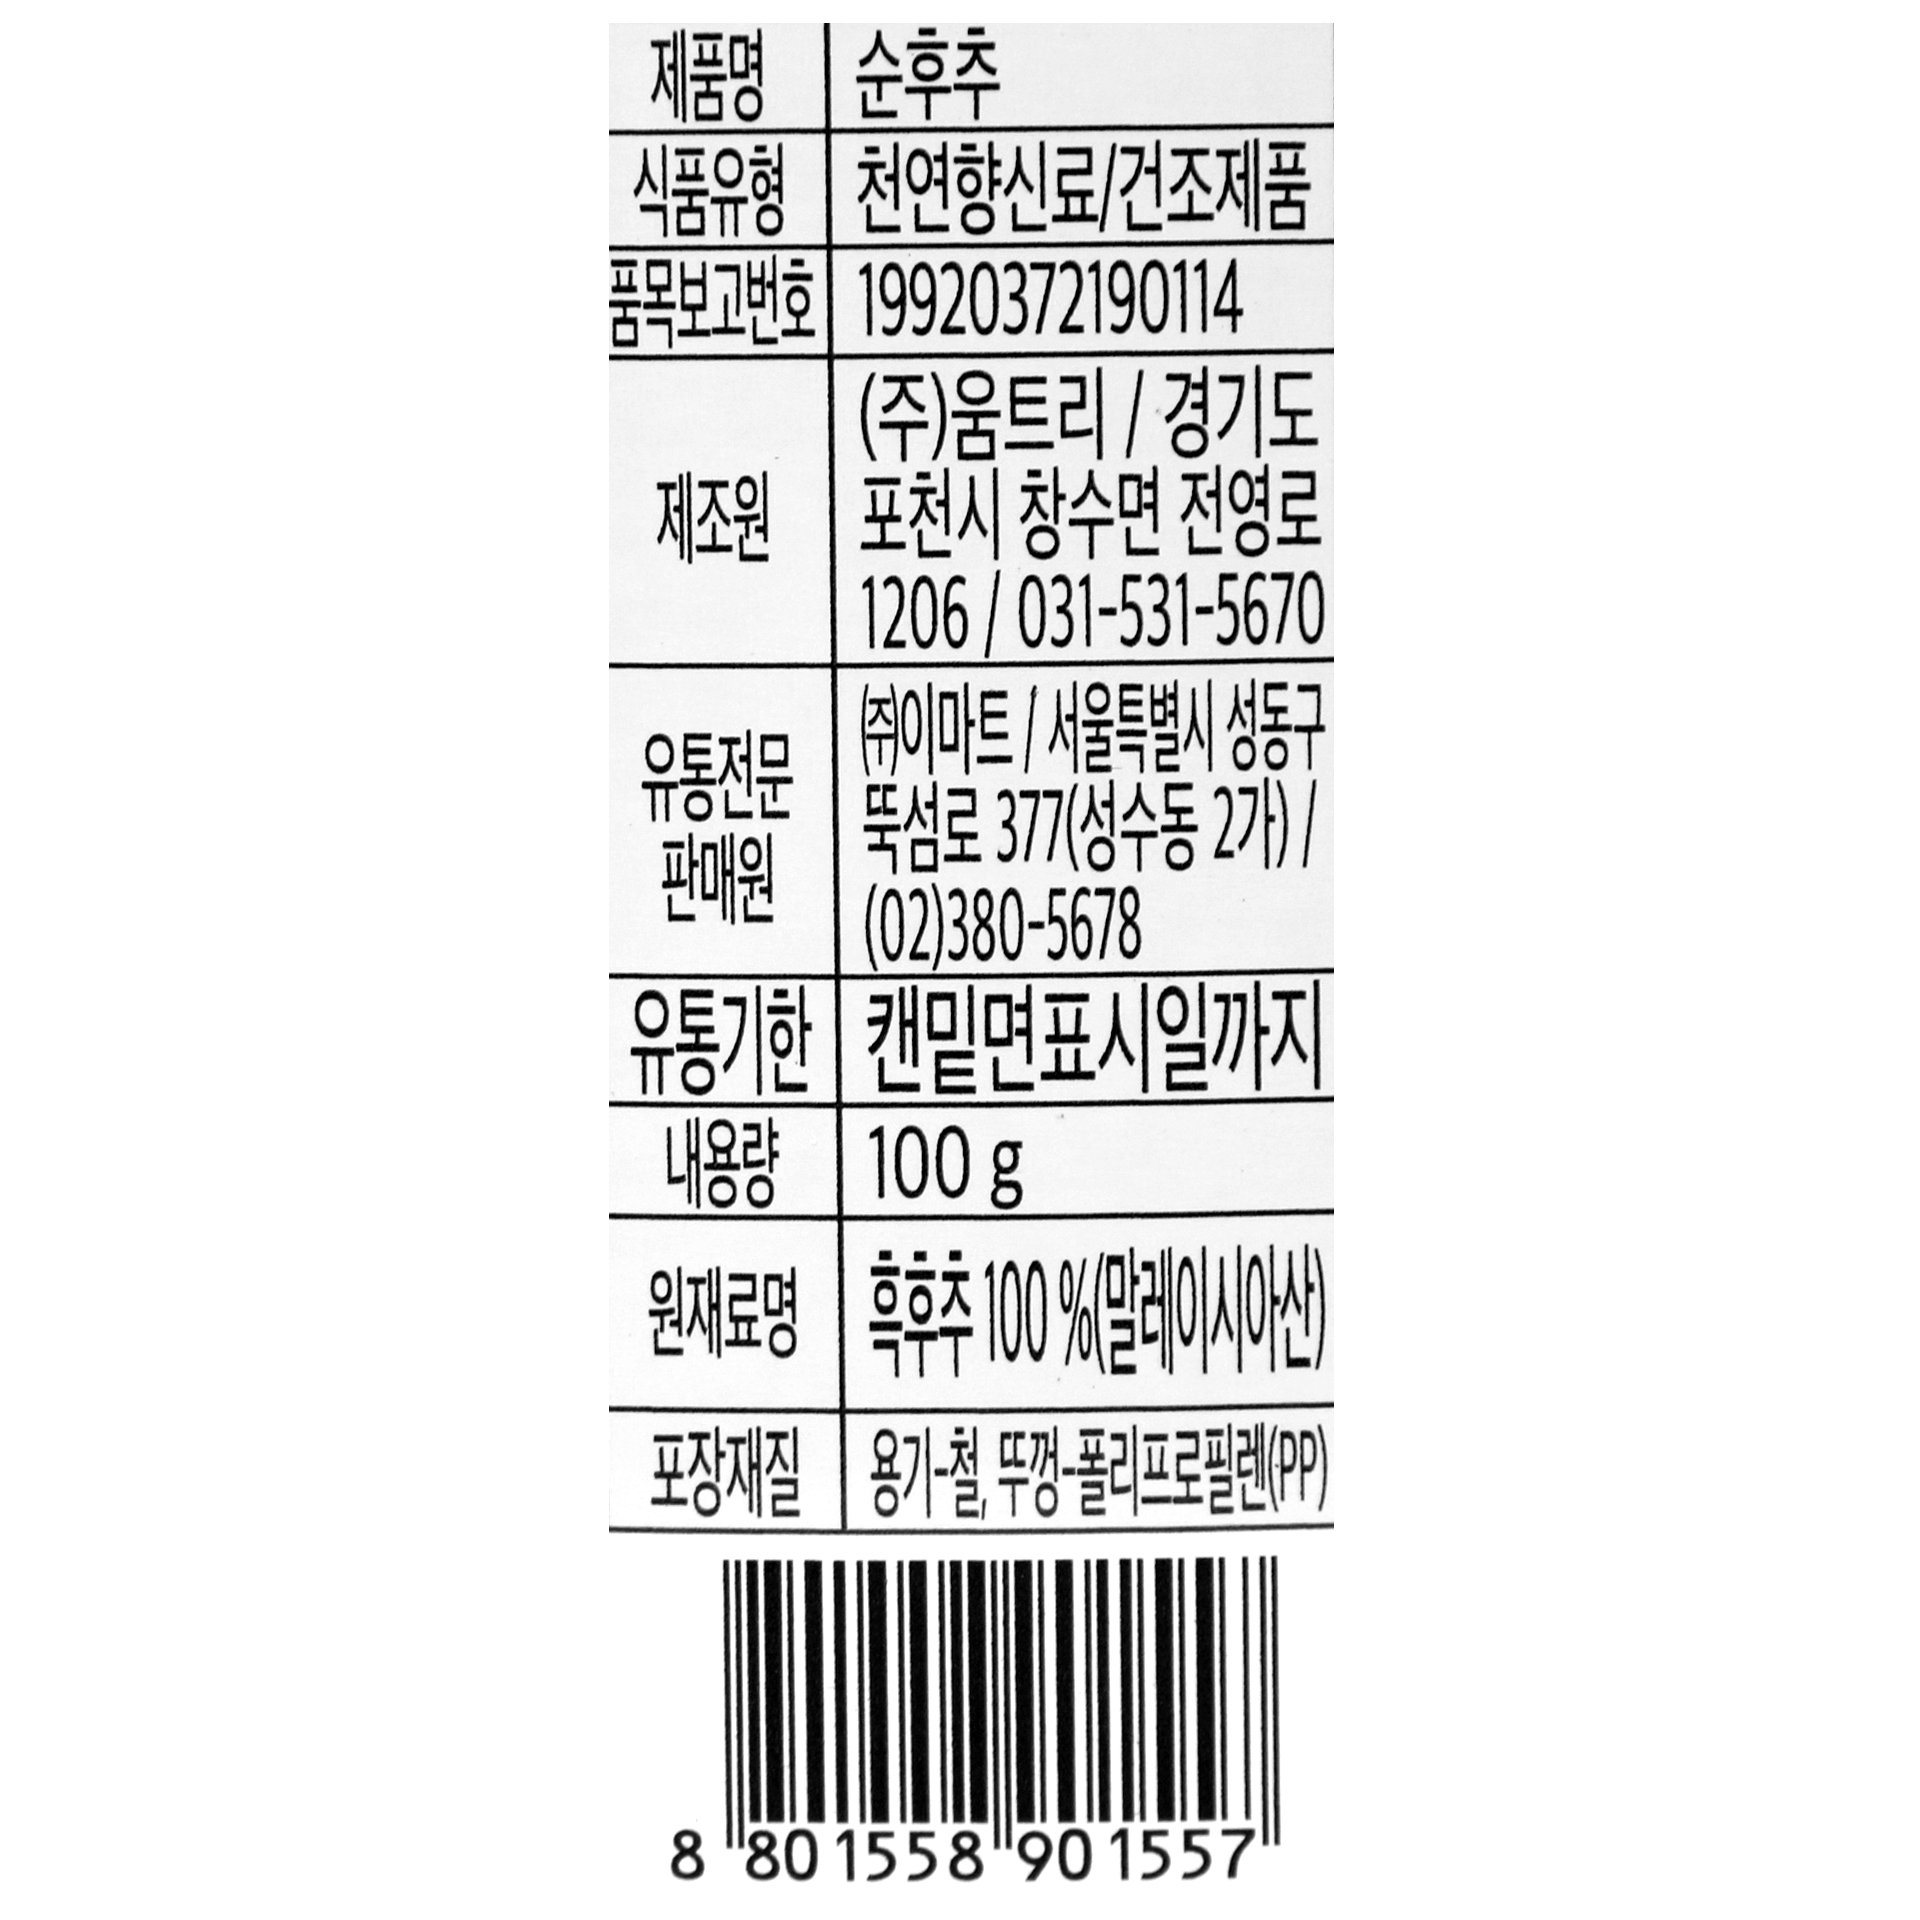 韓國食品-[Peacock] Black Pepper Powder 100g